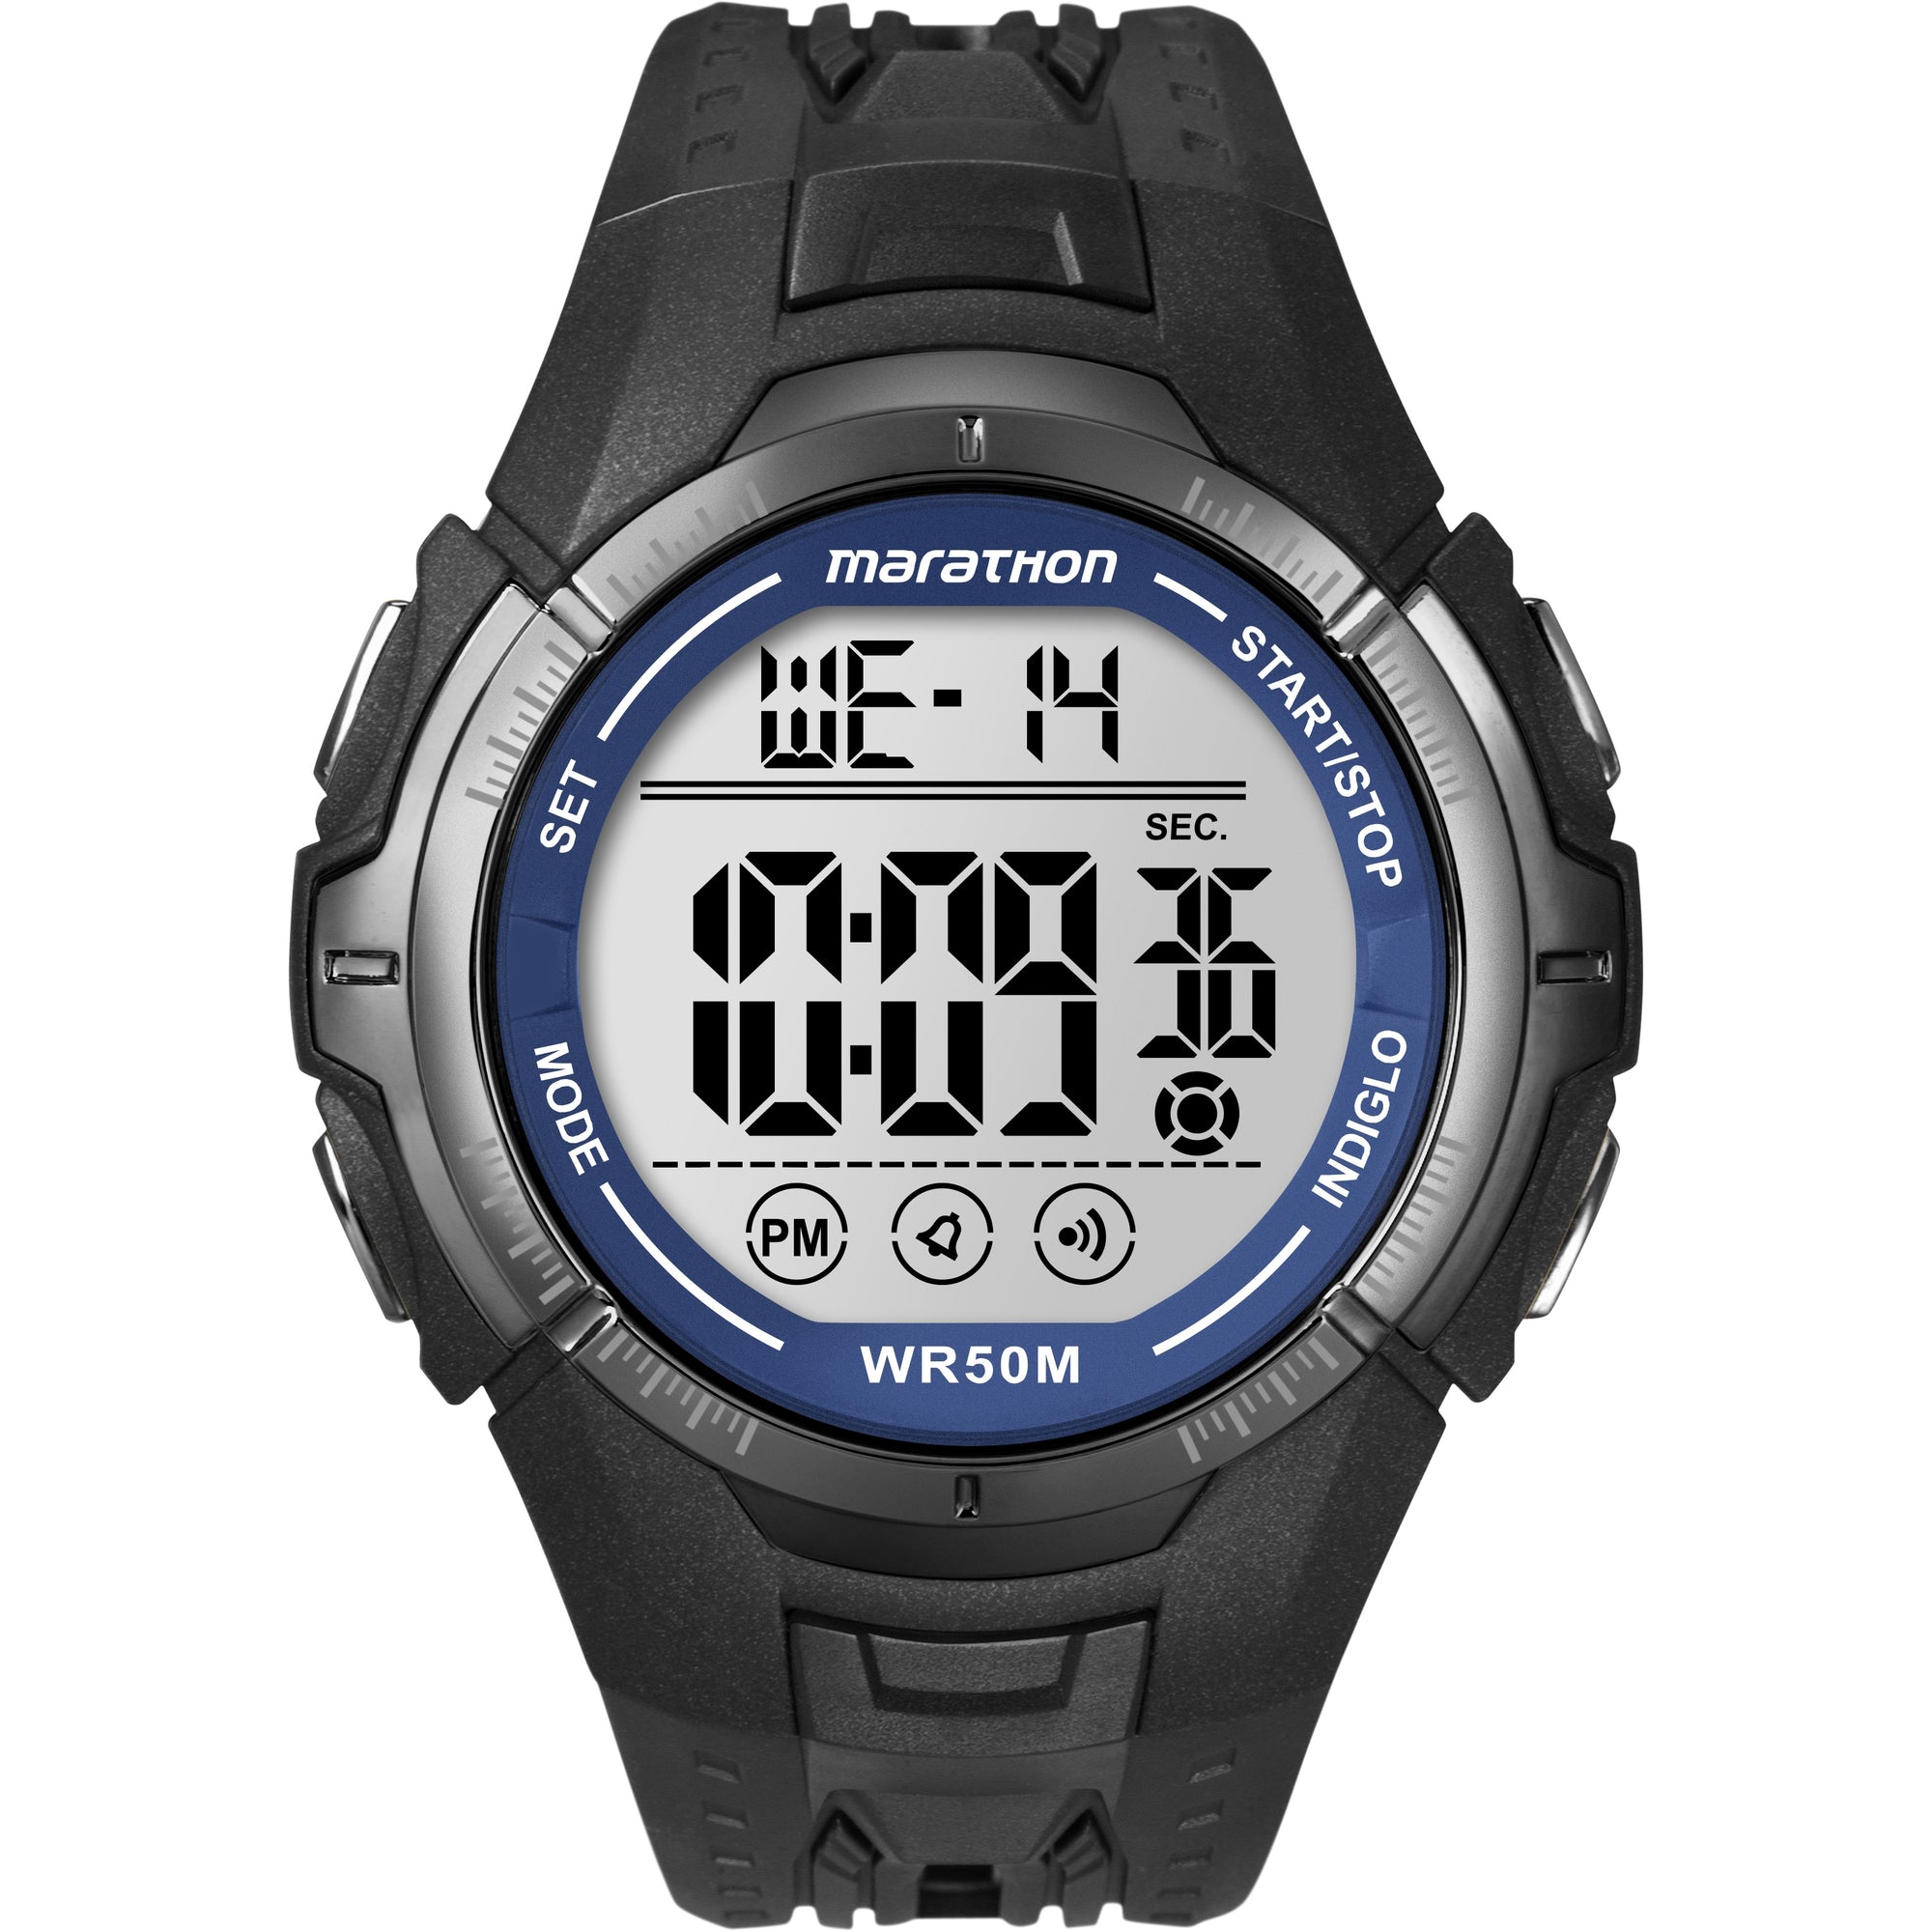 Timex Marathon T5K359 Digital Full-Size Black/Blue Resin Strap Watch